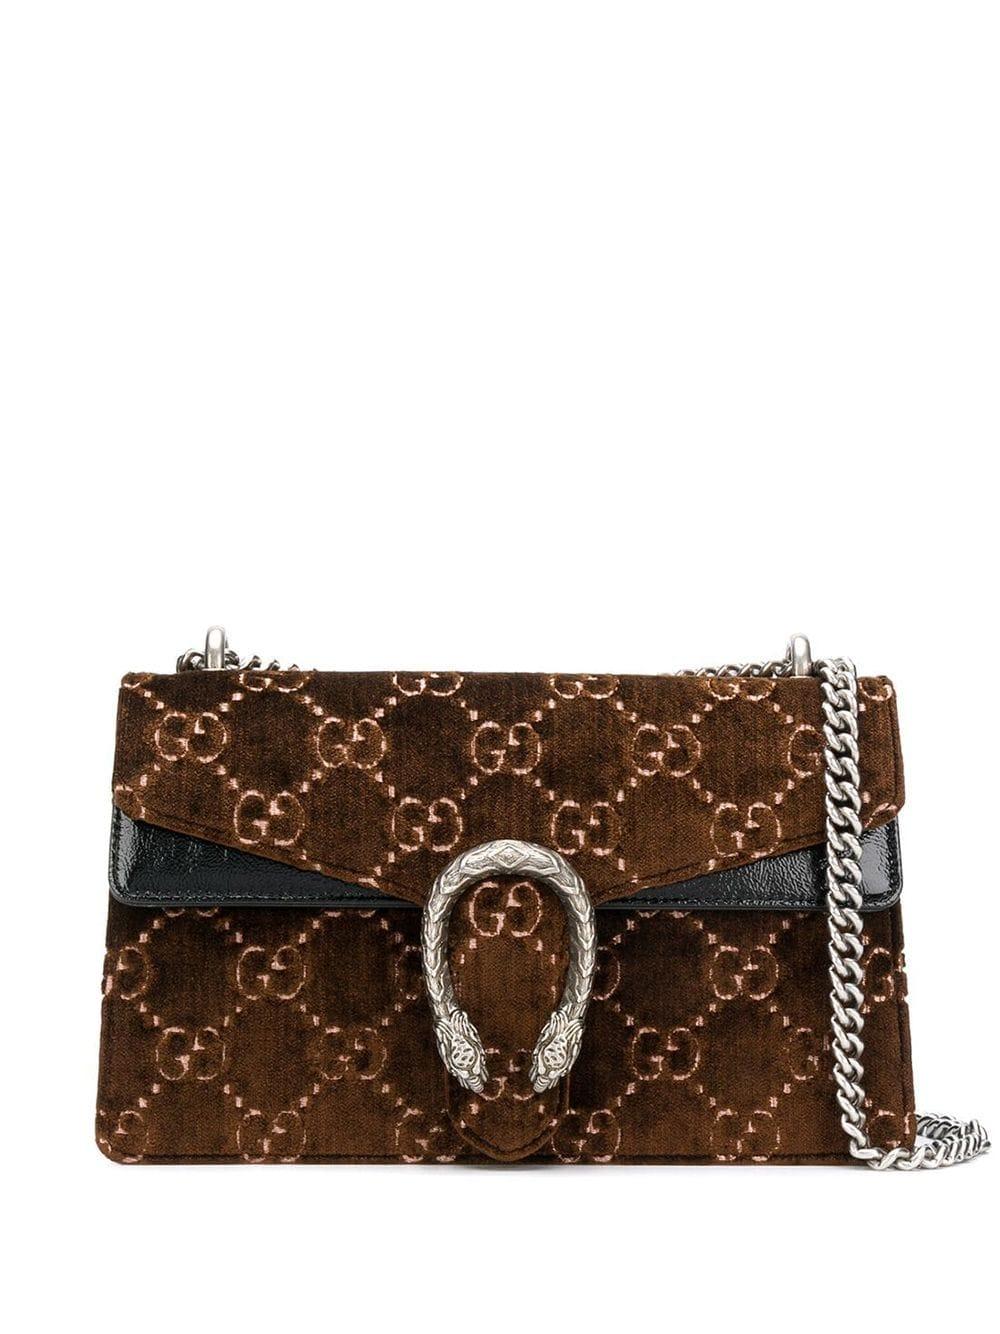 Gucci Dionysus GG Velvet Small Shoulder Bag in Brown | Lyst